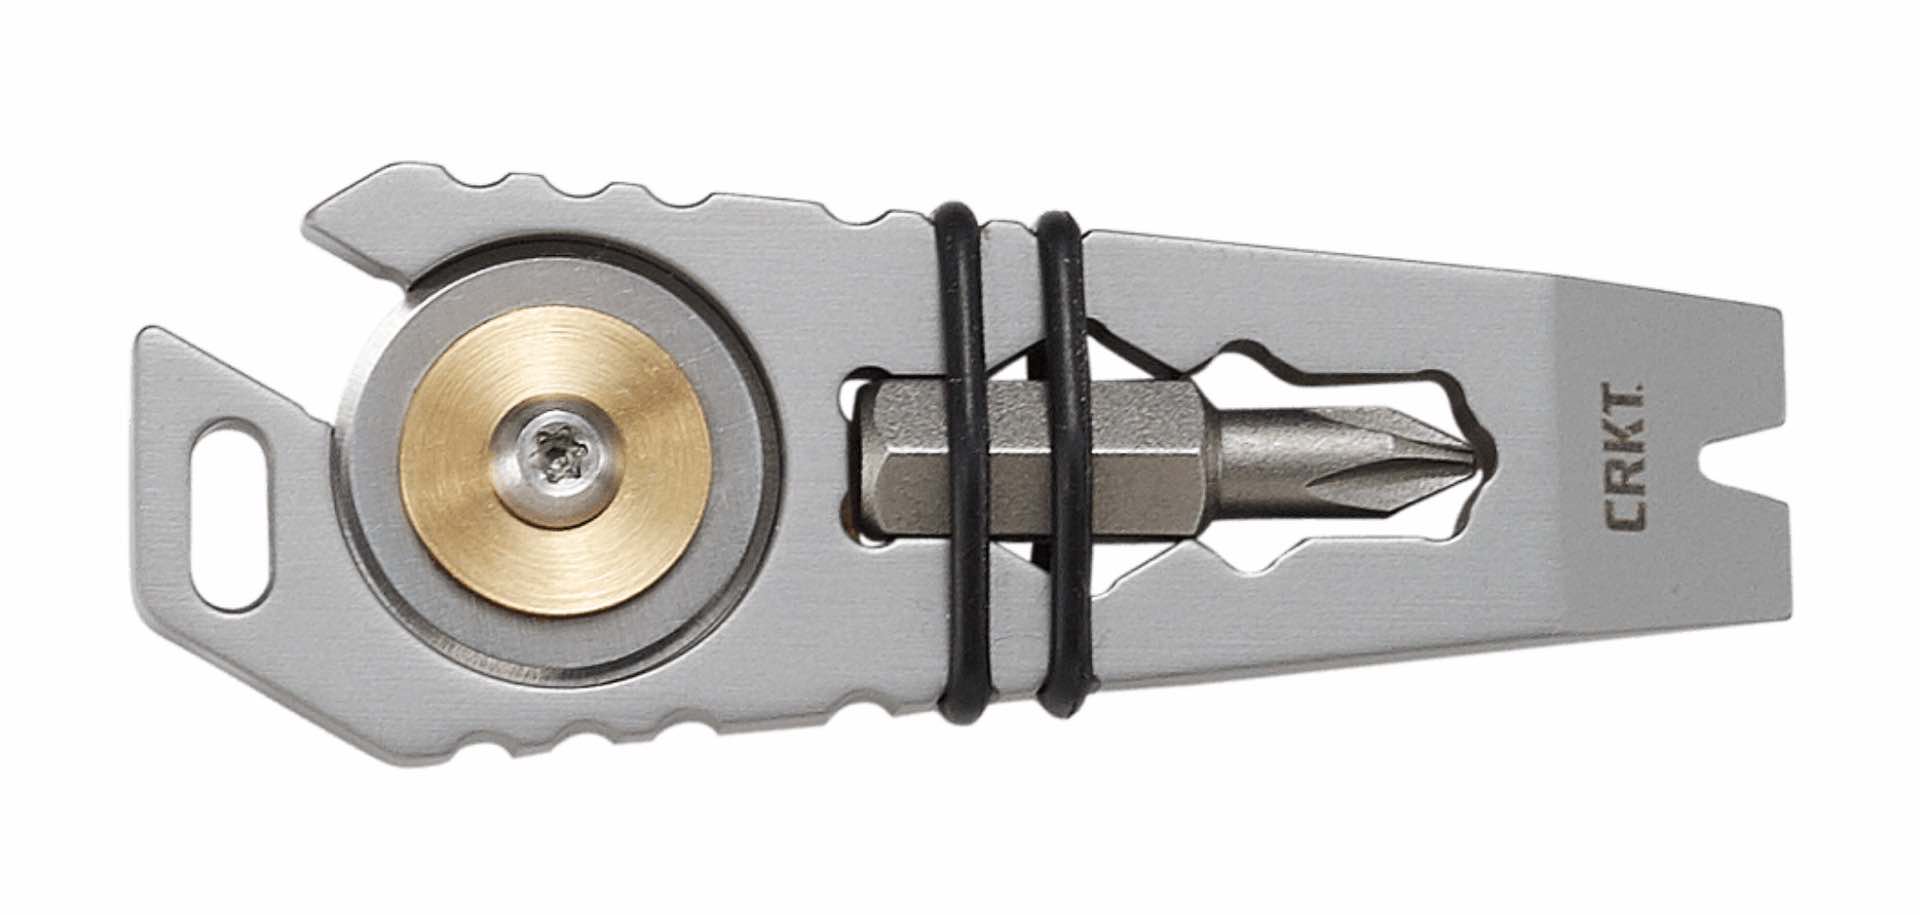 crkt-pry-cutter-keychain-tool